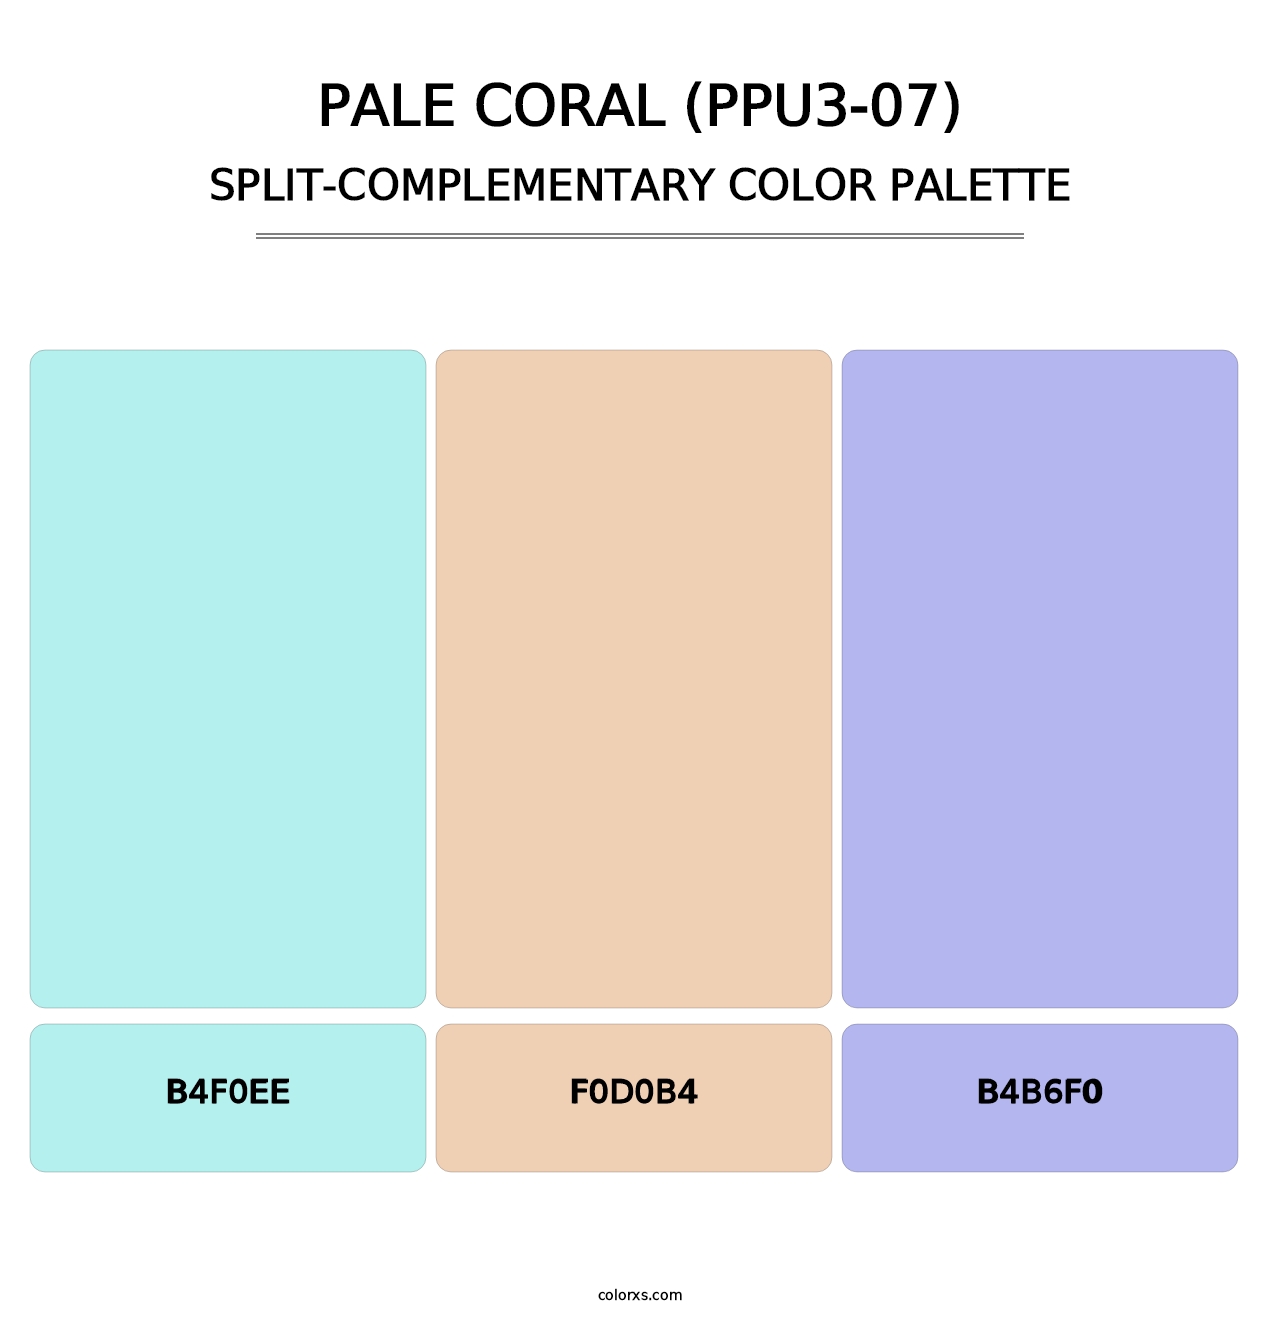 Pale Coral (PPU3-07) - Split-Complementary Color Palette